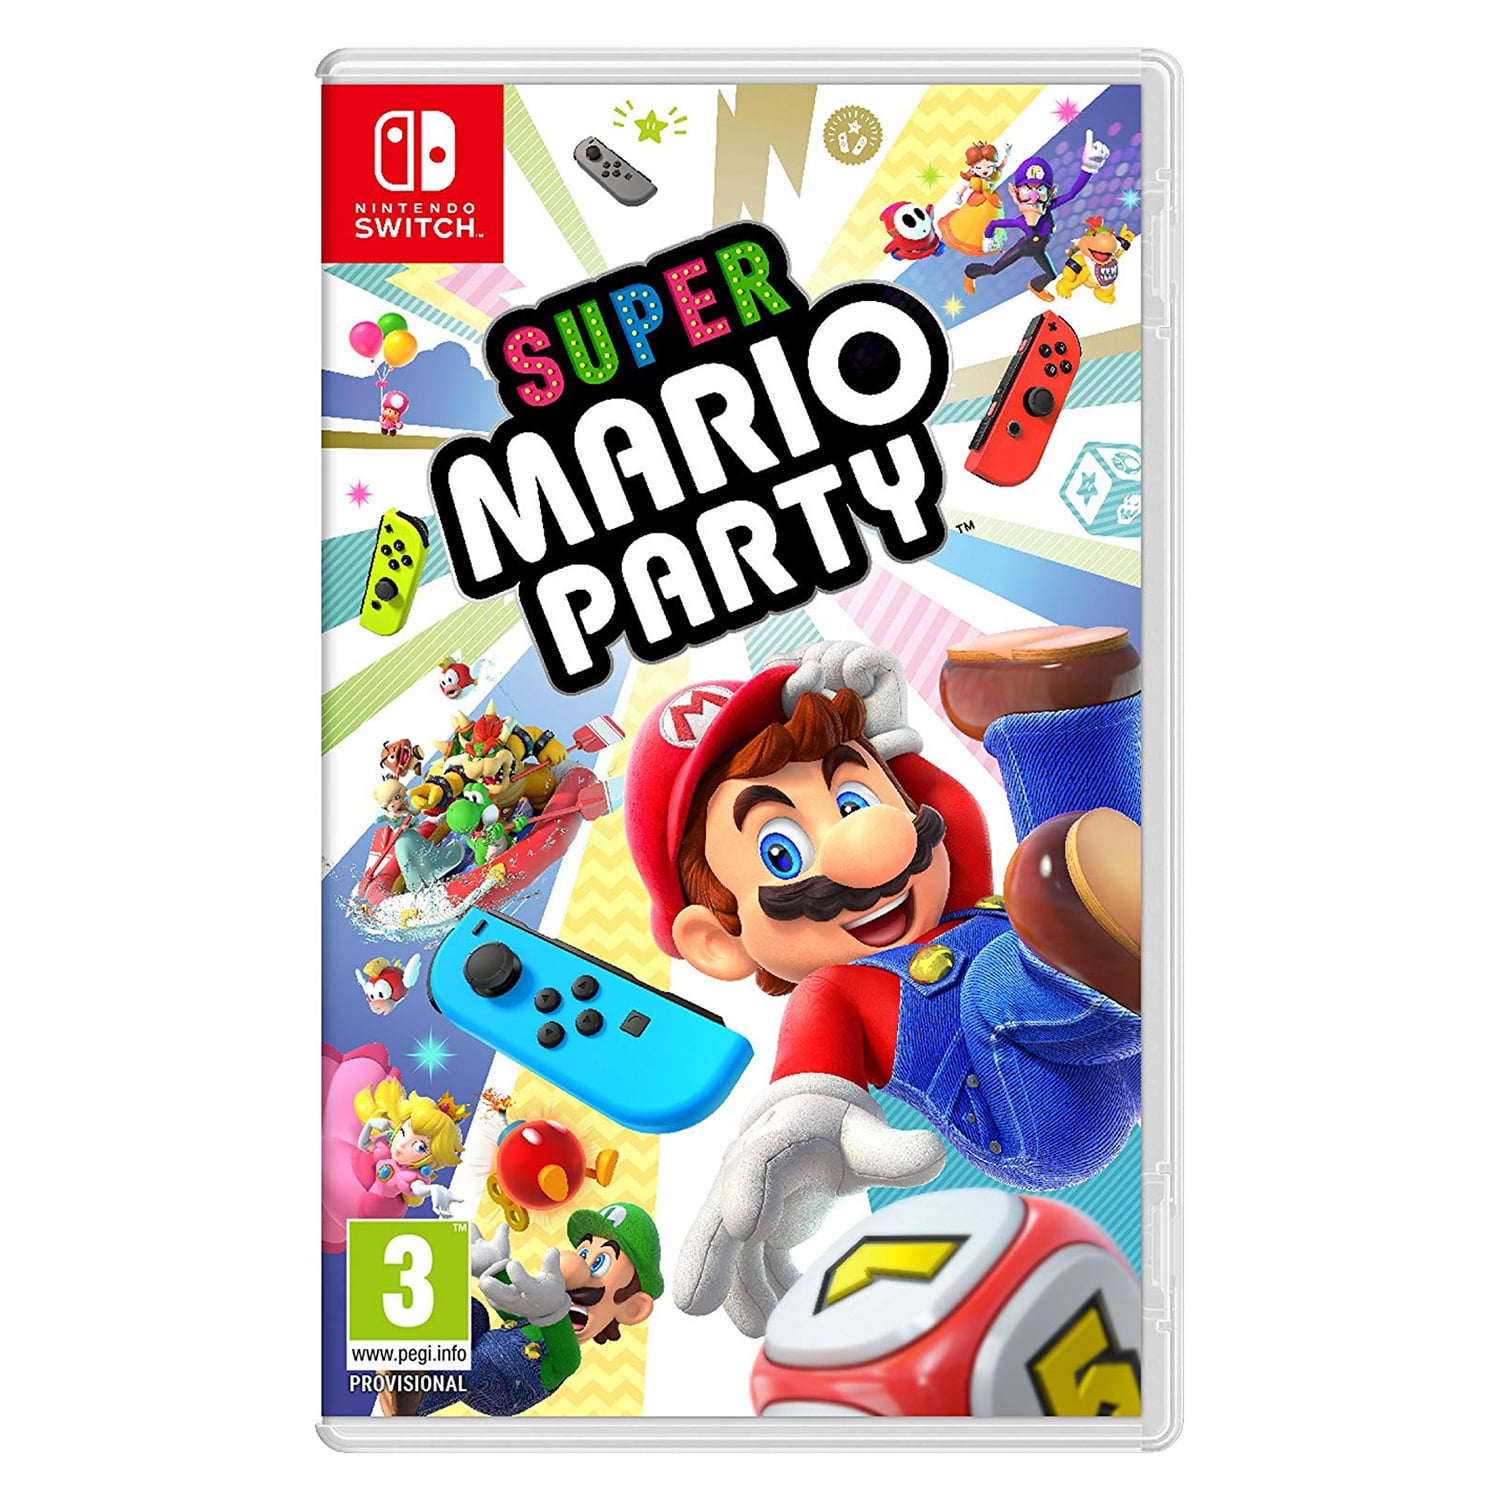 Free play - Super Mario Party